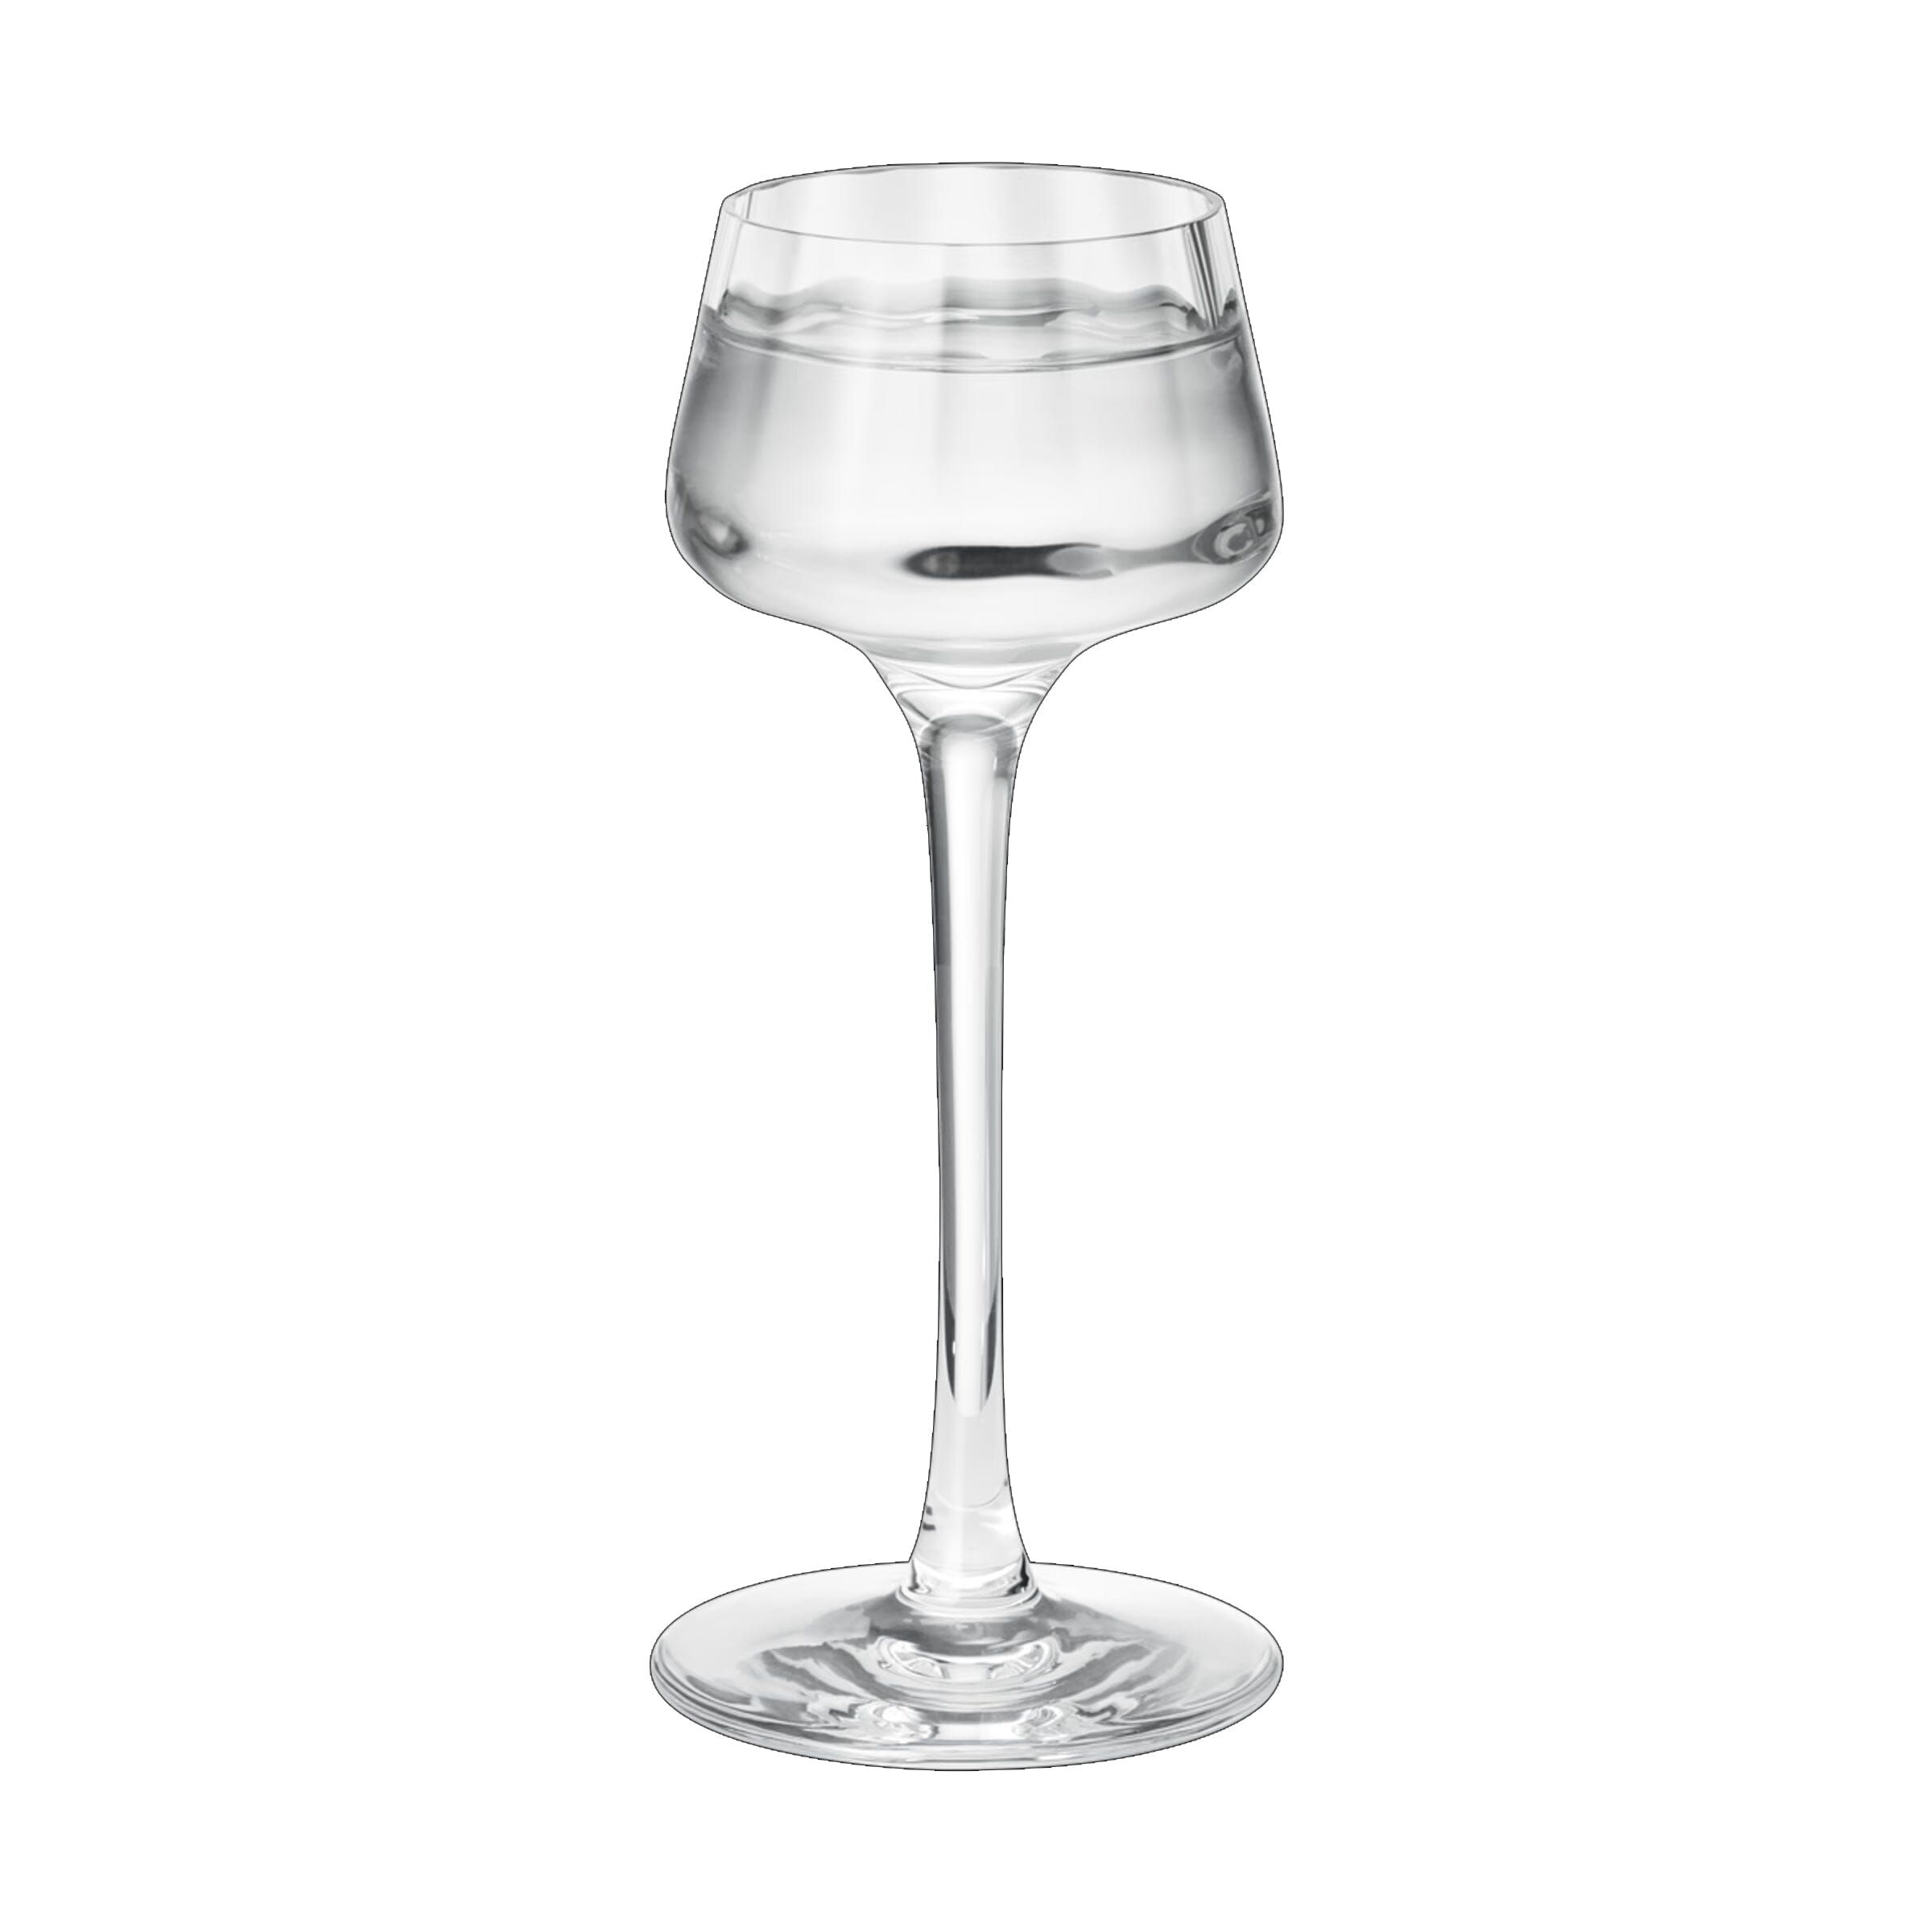 Georg Jensen Bernadotte Cocktail Coupe Glass, Set of 2, 6.8 oz.